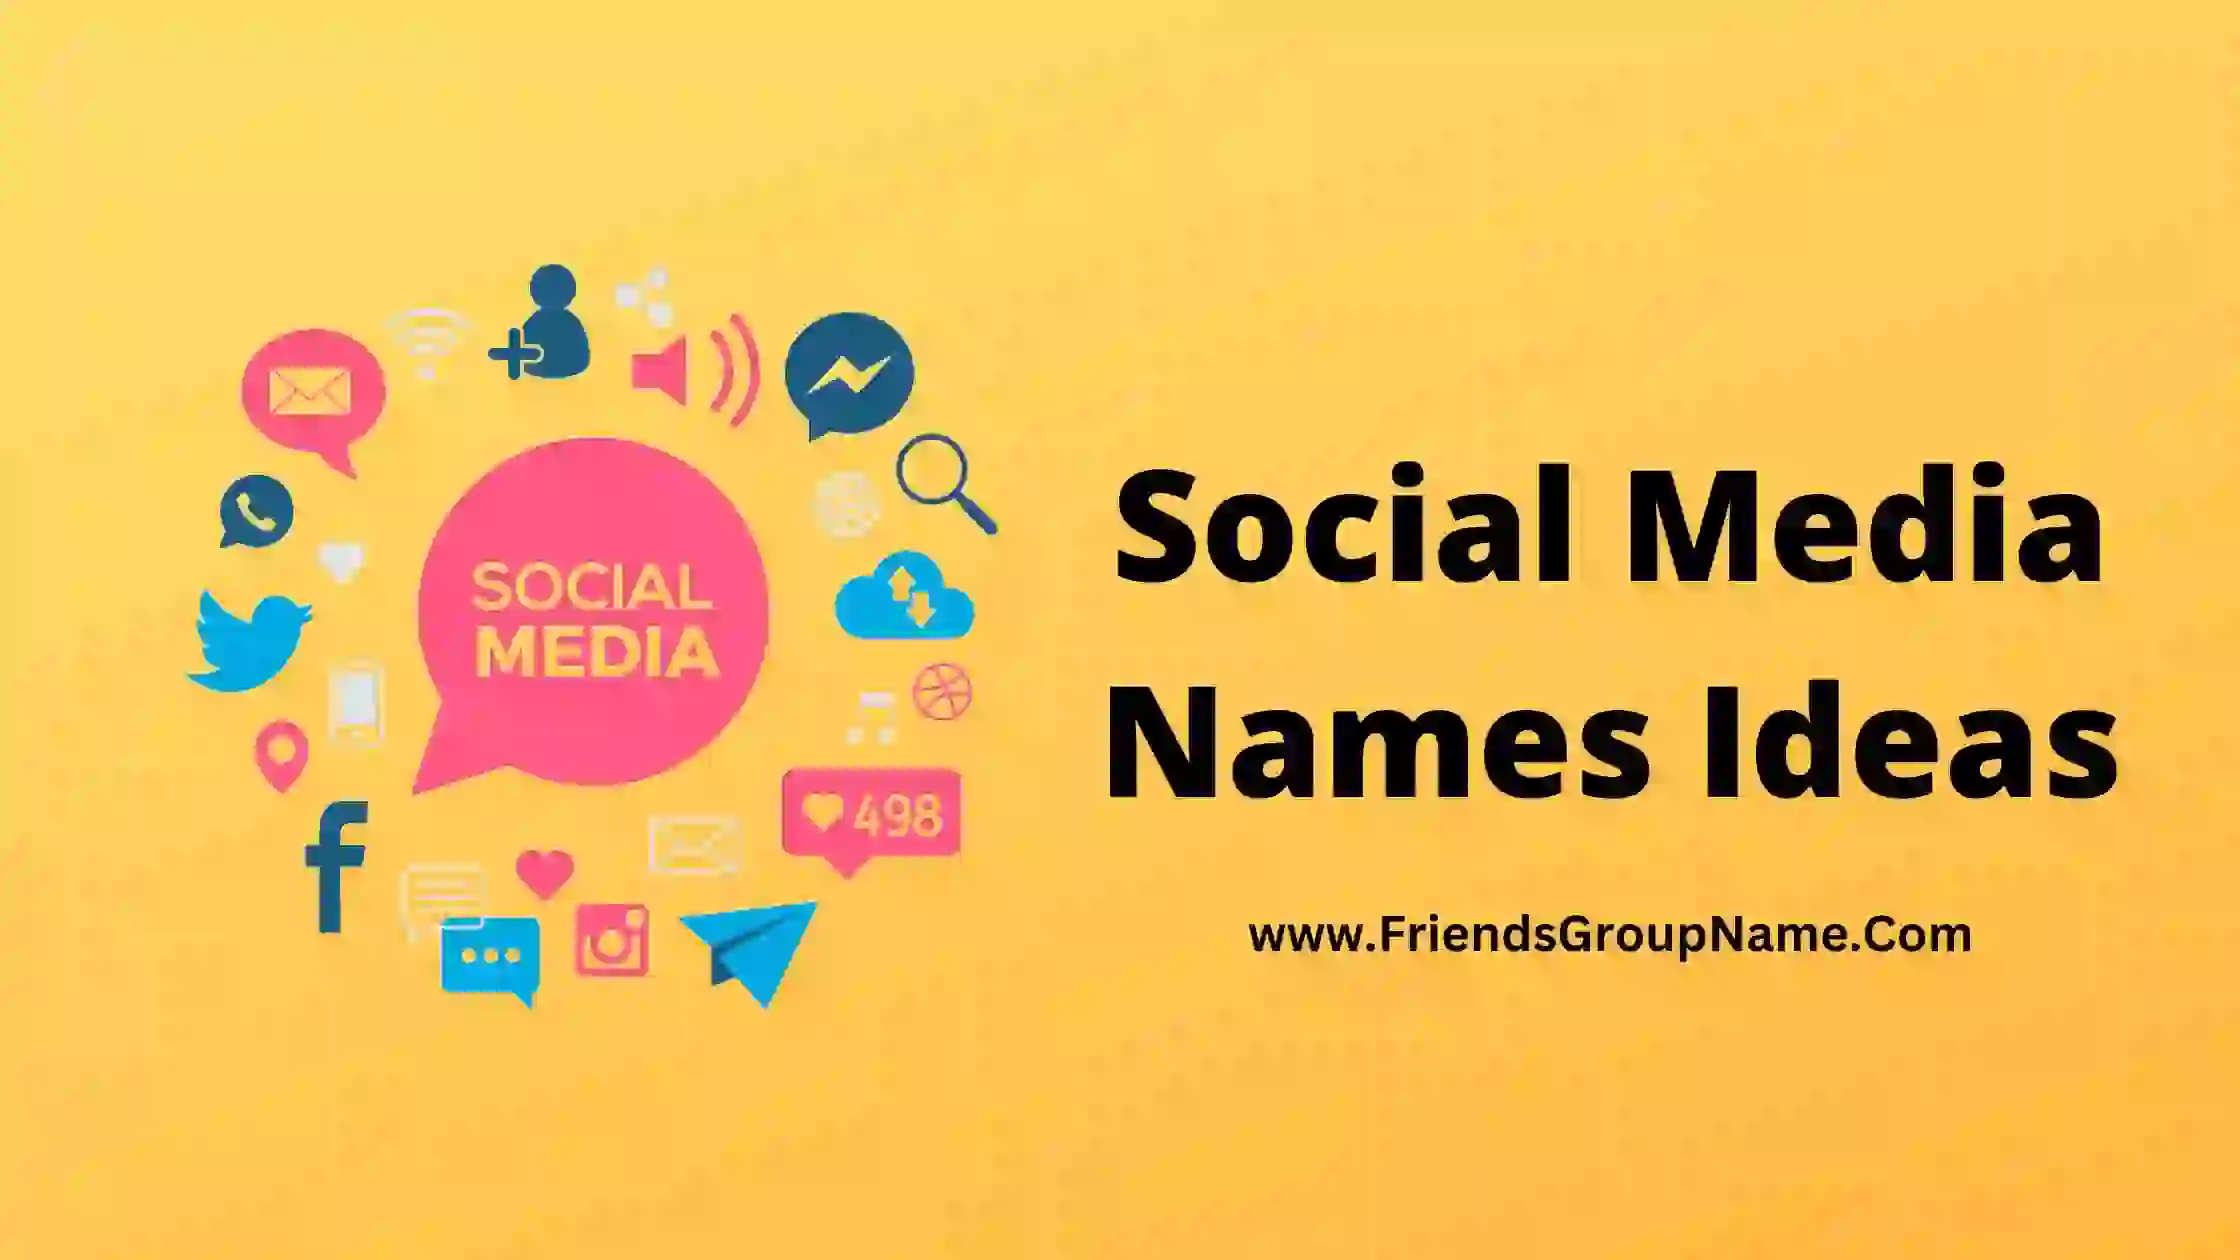 Social Media Names Ideas